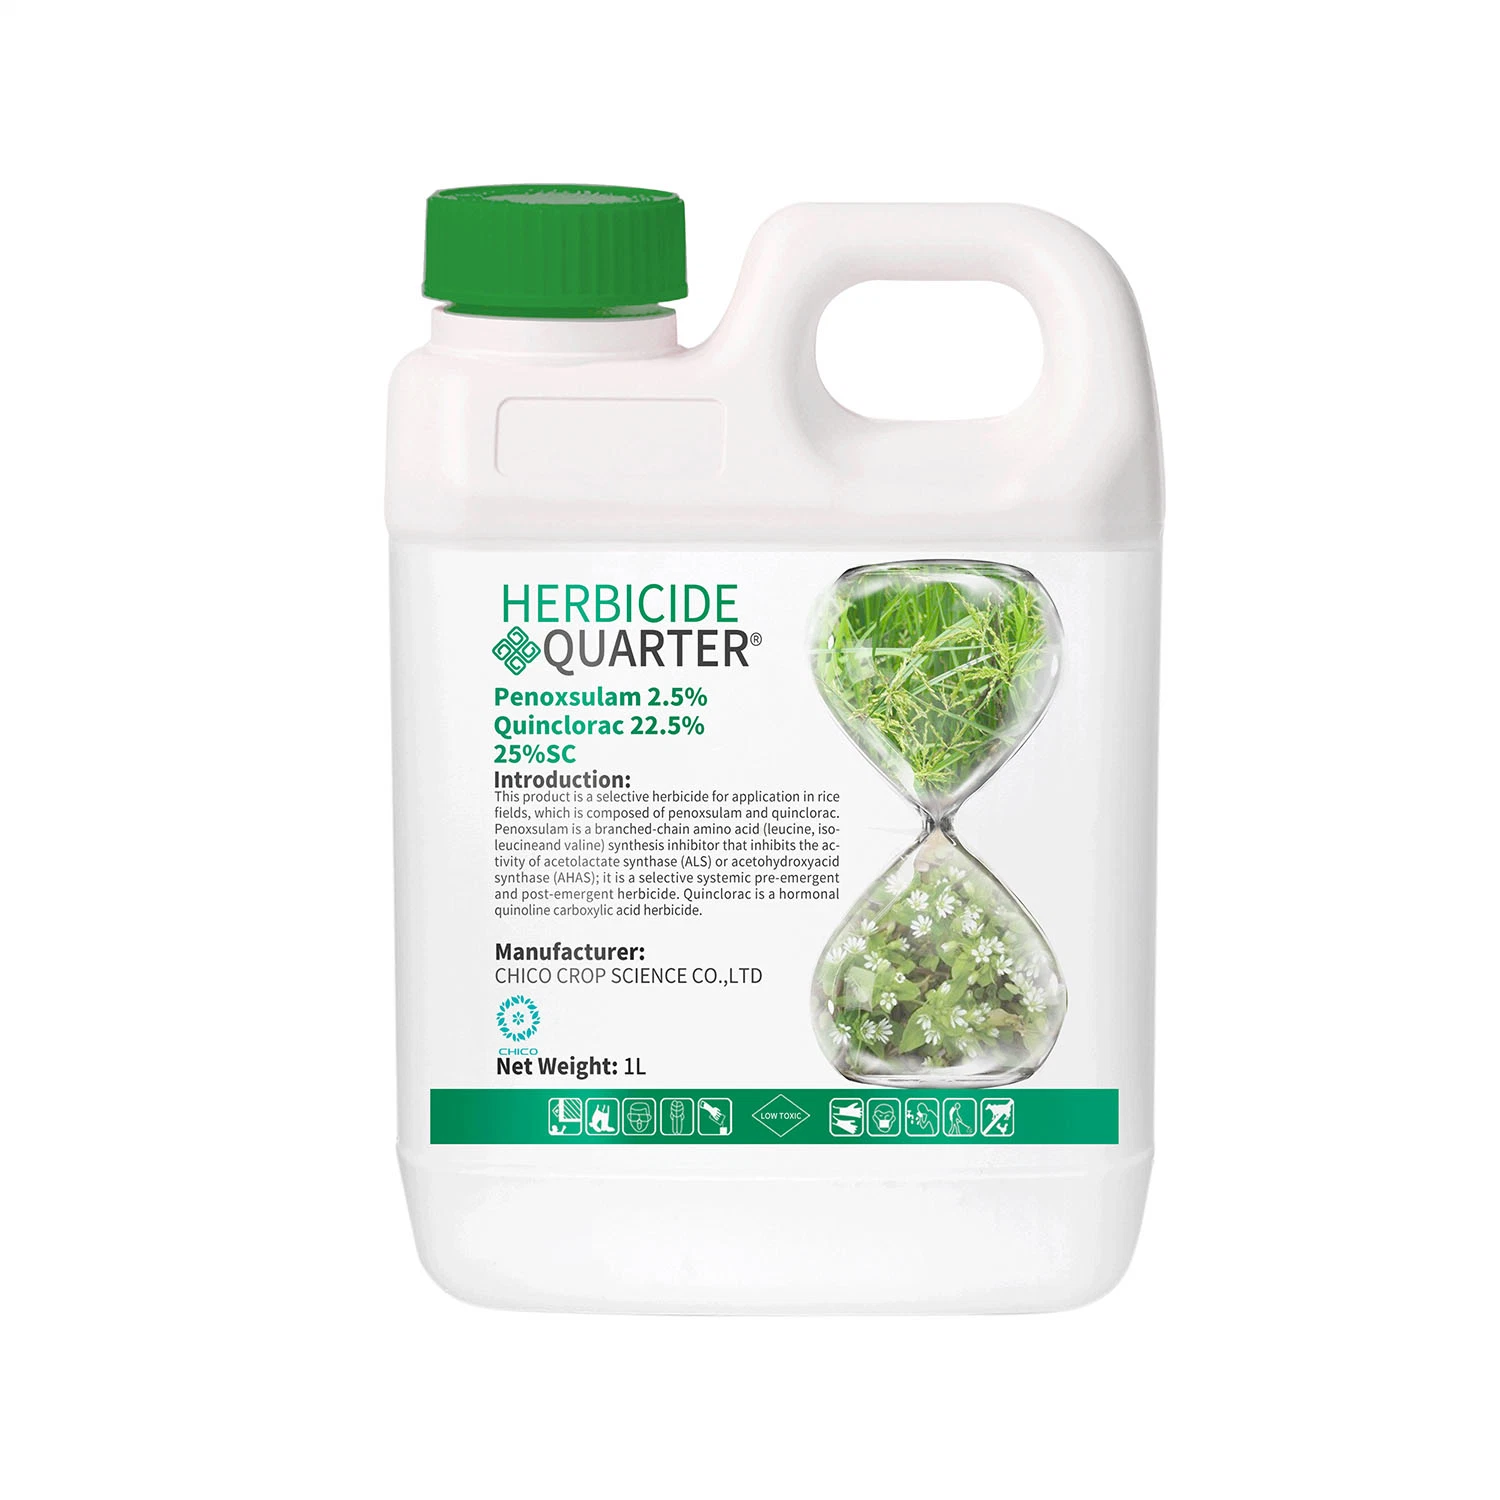 Penoxsulam 2.5% + Quinclorac 22.5% 25% Sc agrochemical herbicide rice filed